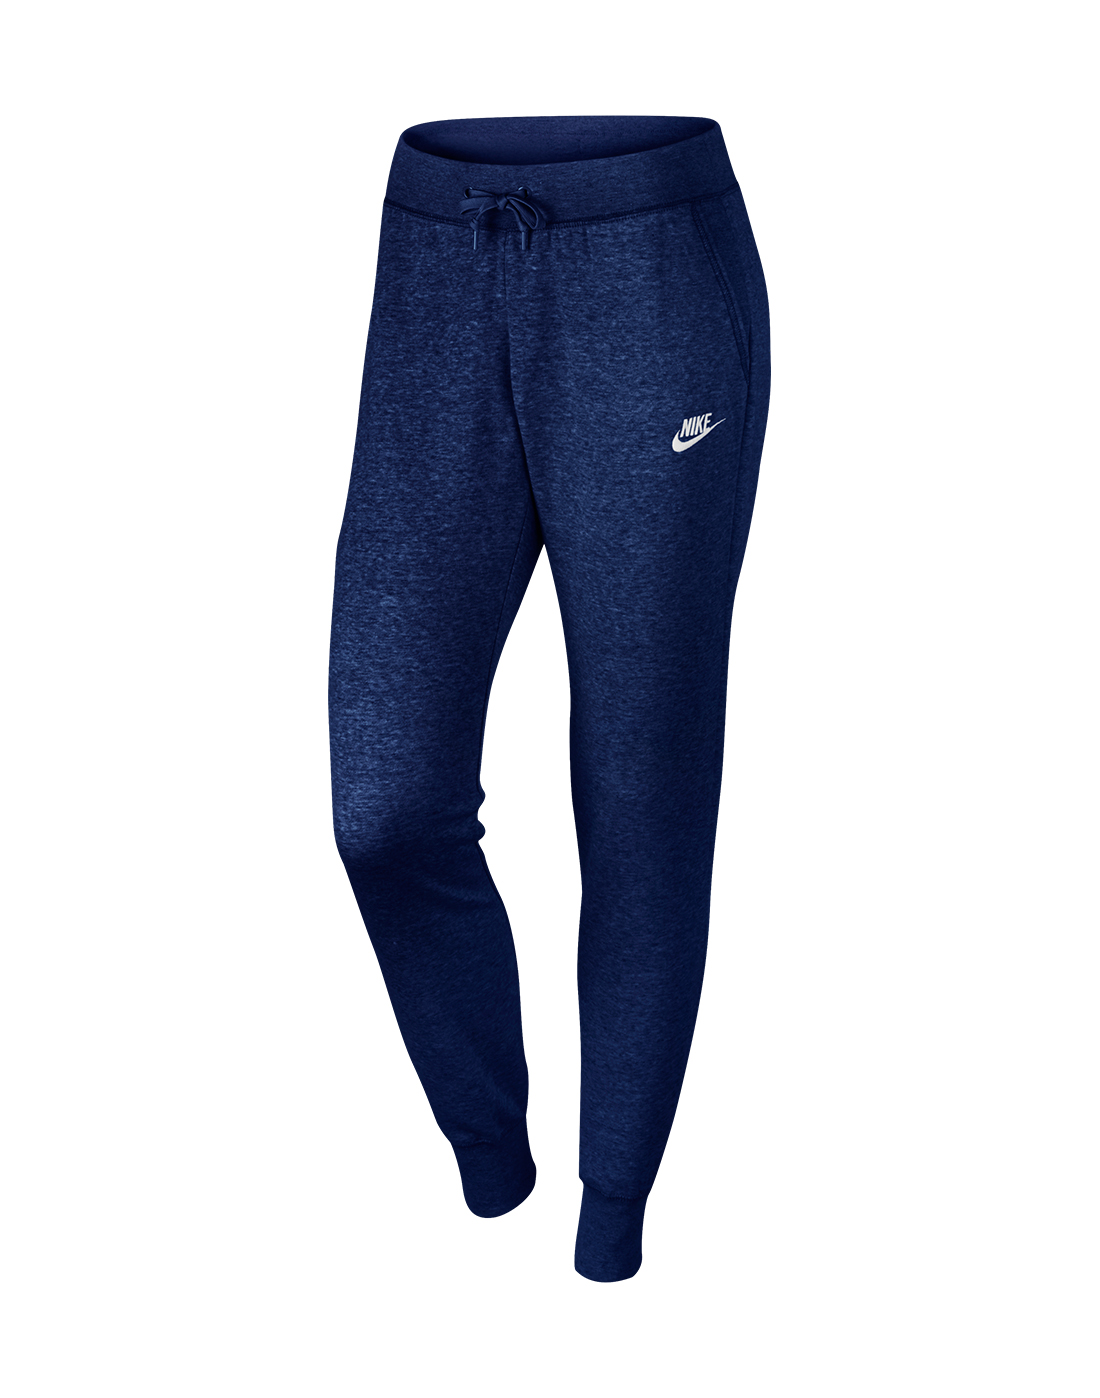 Women's Navy Nike Slim Pants | Life Style Sports